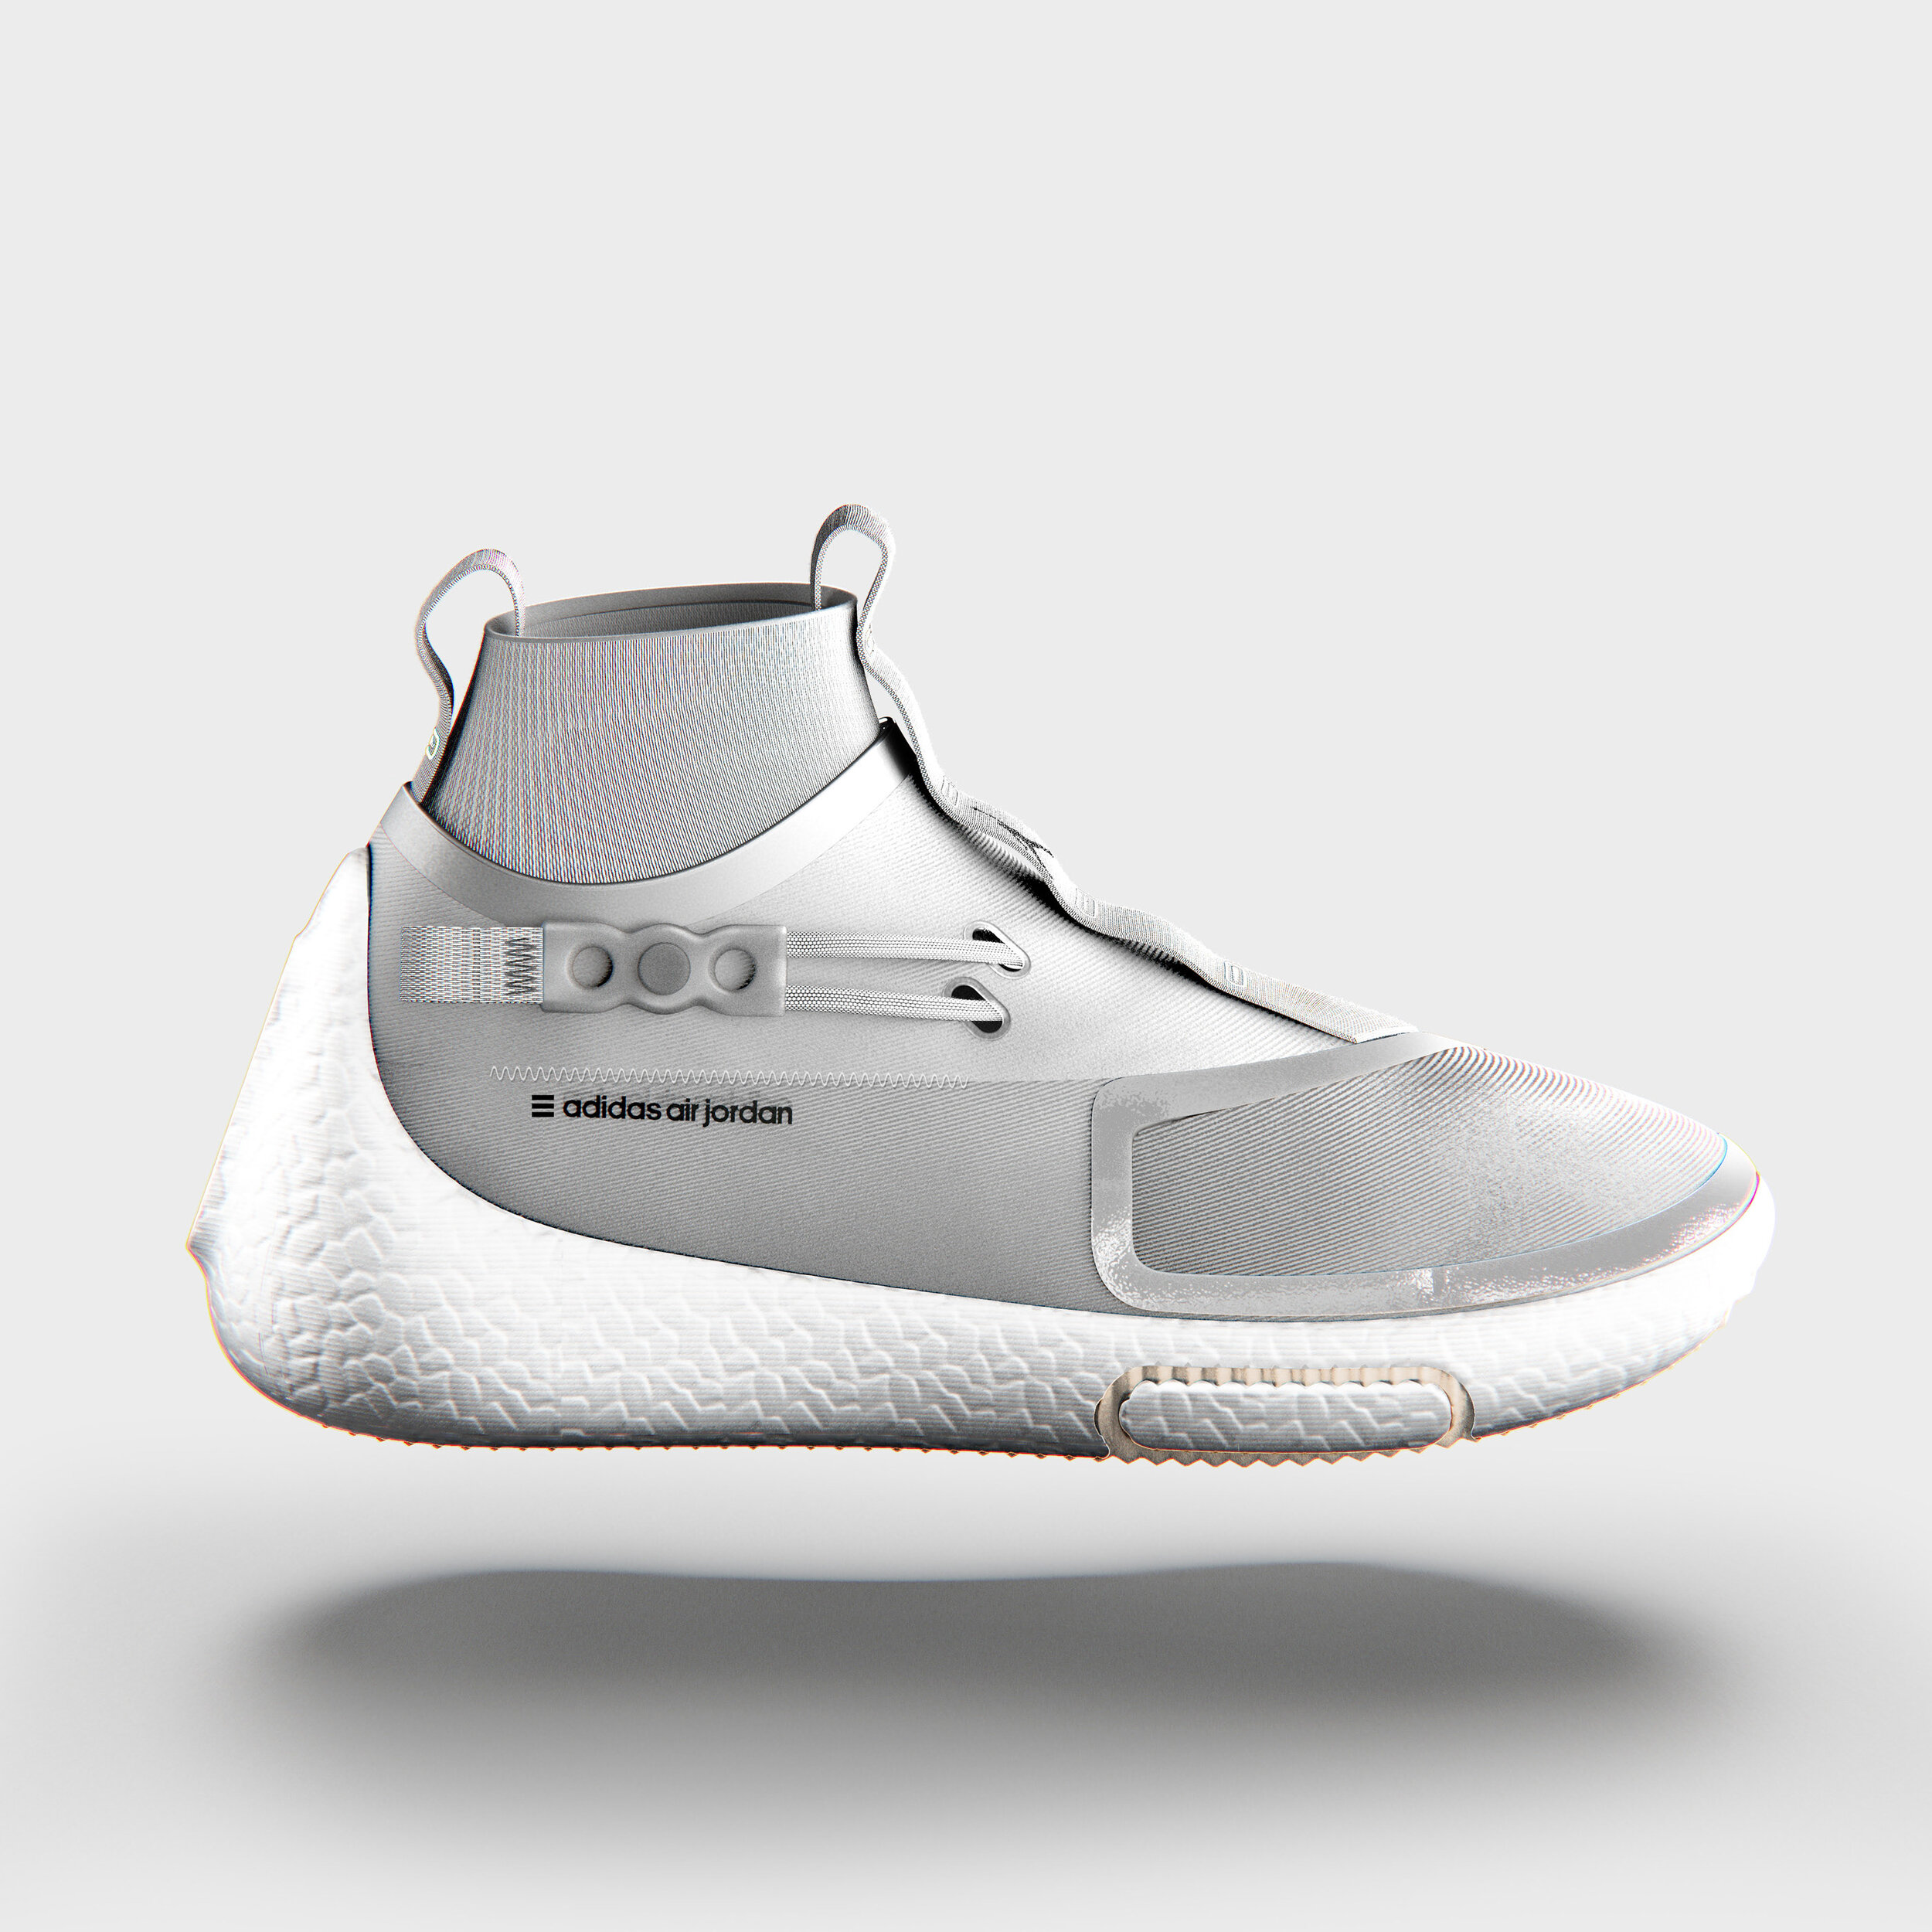 How? 9:45 handkerchief Adidas Air Jordan' By Thomas Le — CONCEPTKICKS®